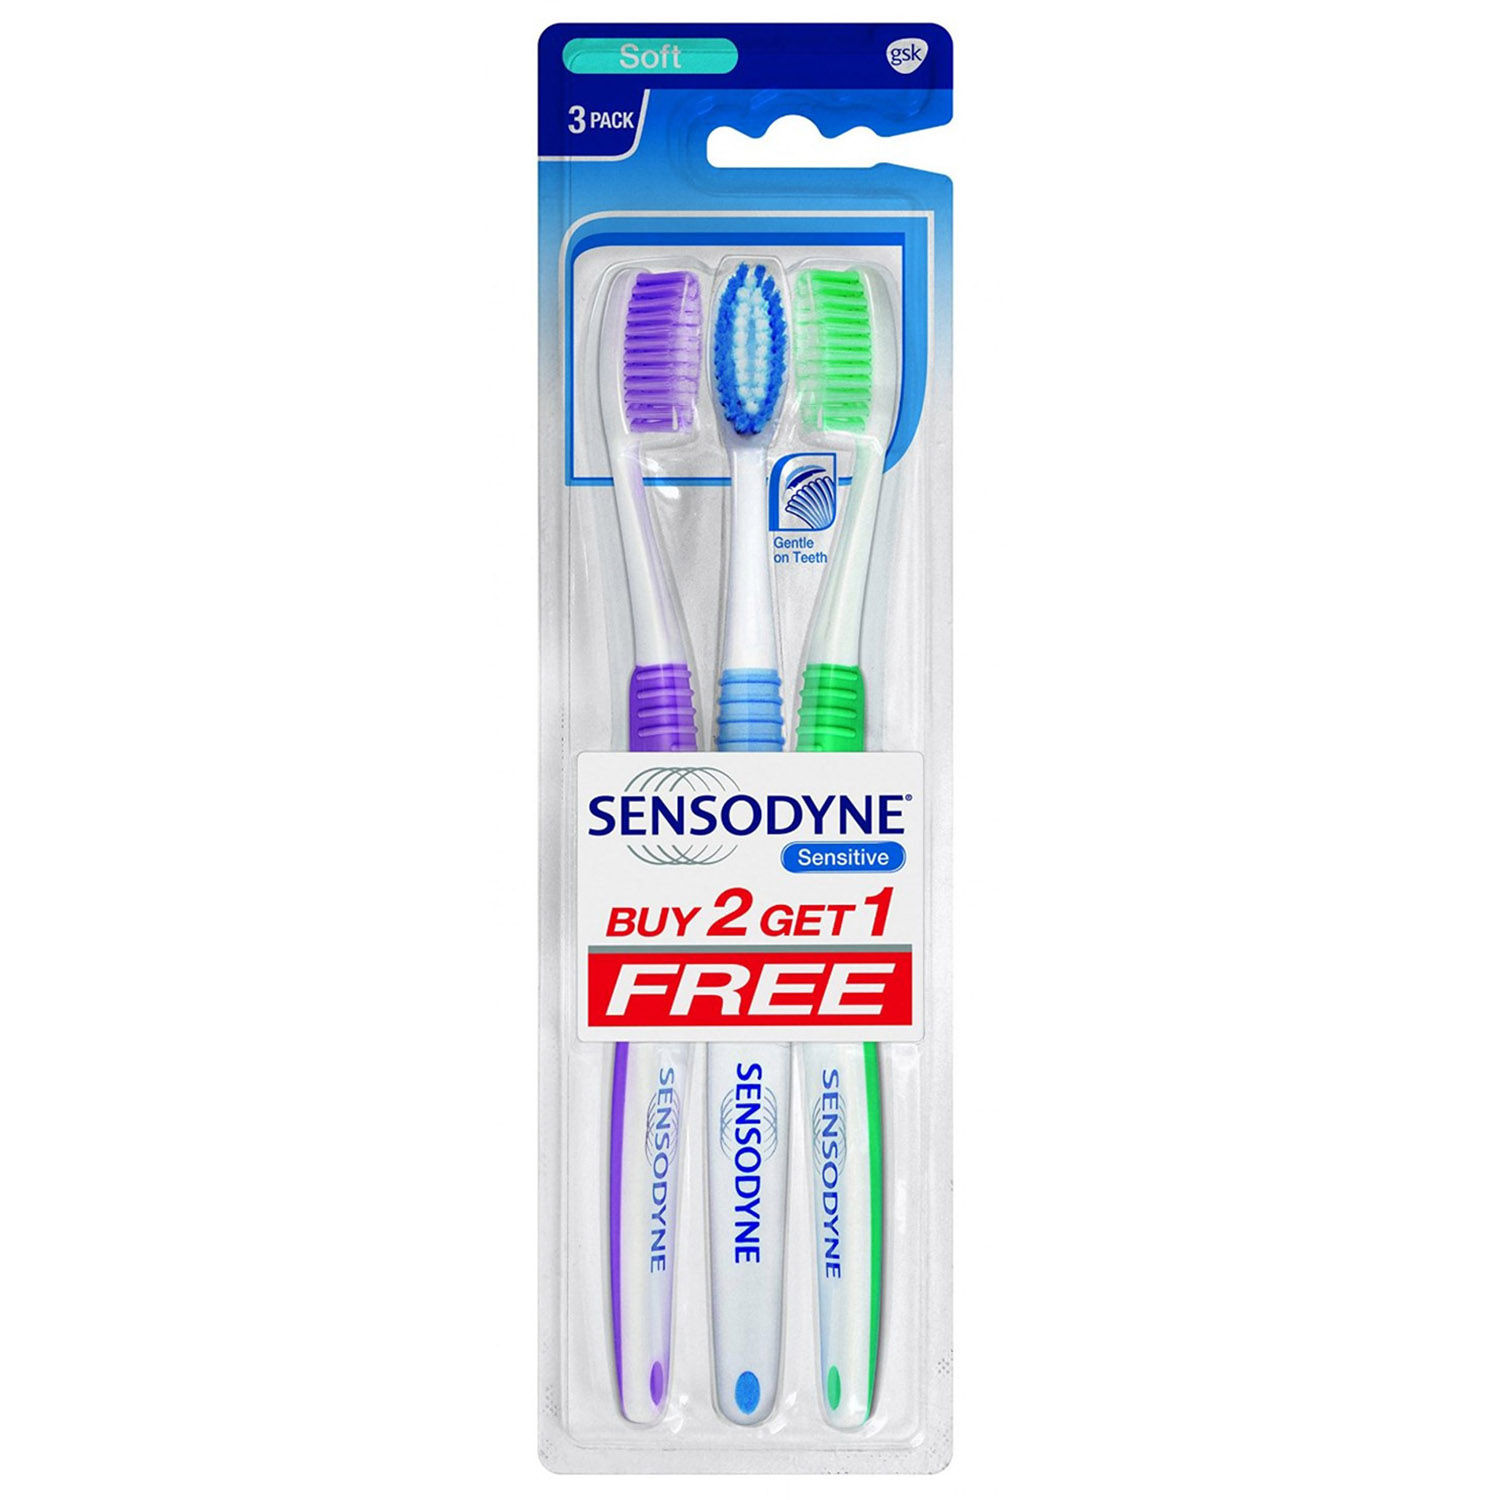 Sensodyne Sensitive Soft Toothbrush, Buy 2 Get 1 Free, Pack of 1 